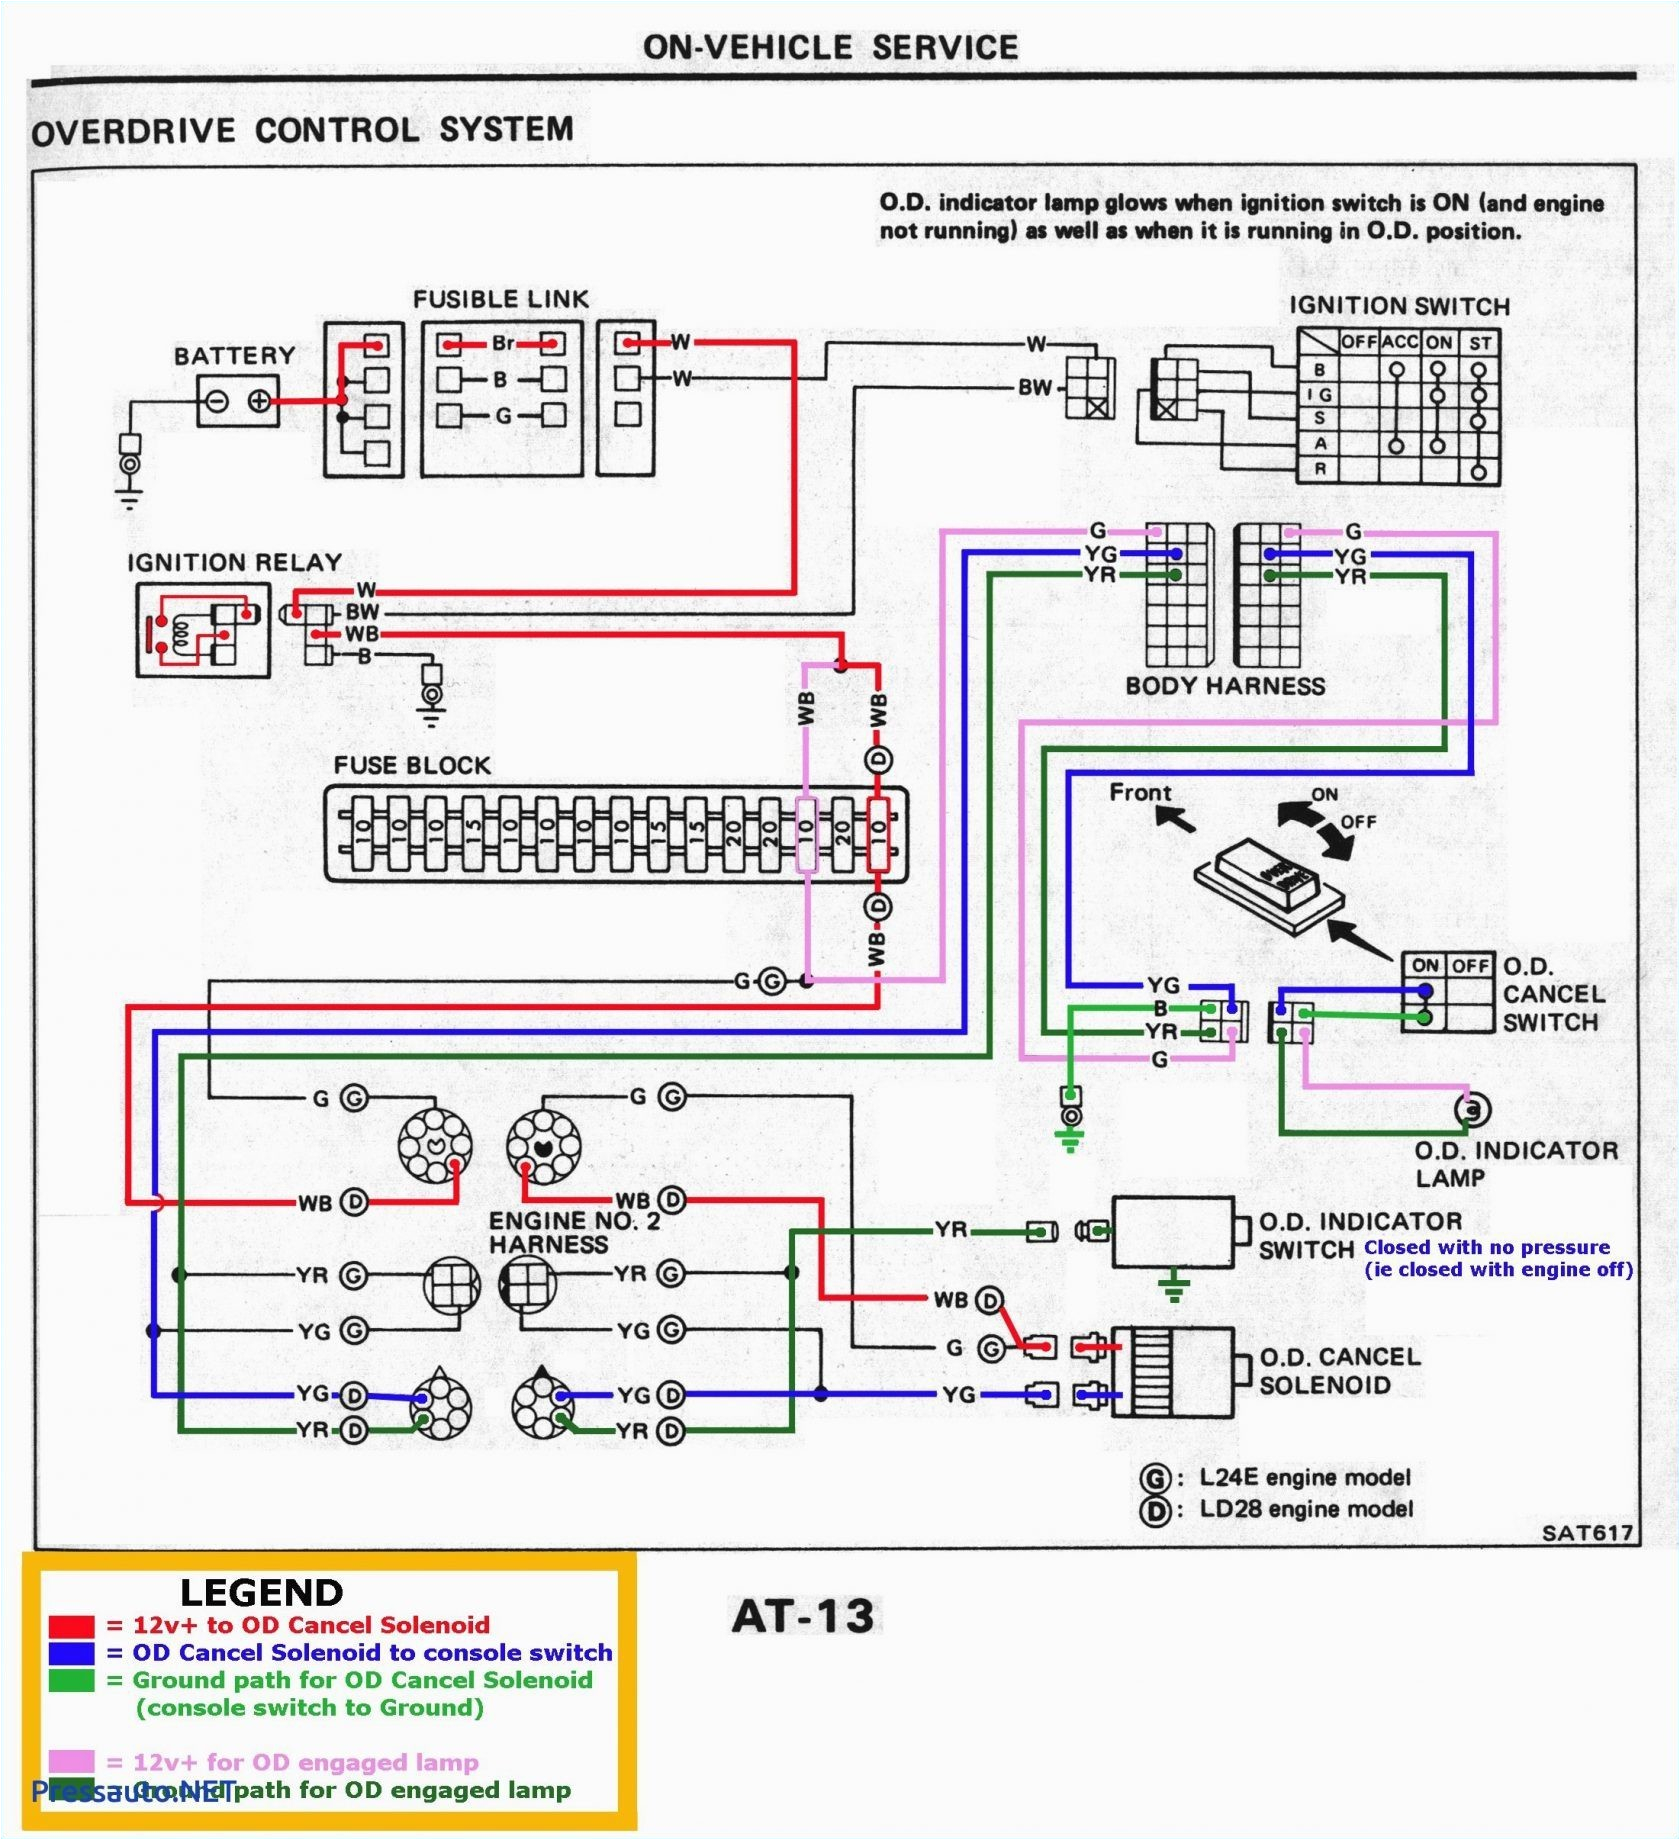 bmw wds wiring colours blog wiring diagram wds bmw wiring diagram system online bmw wds java